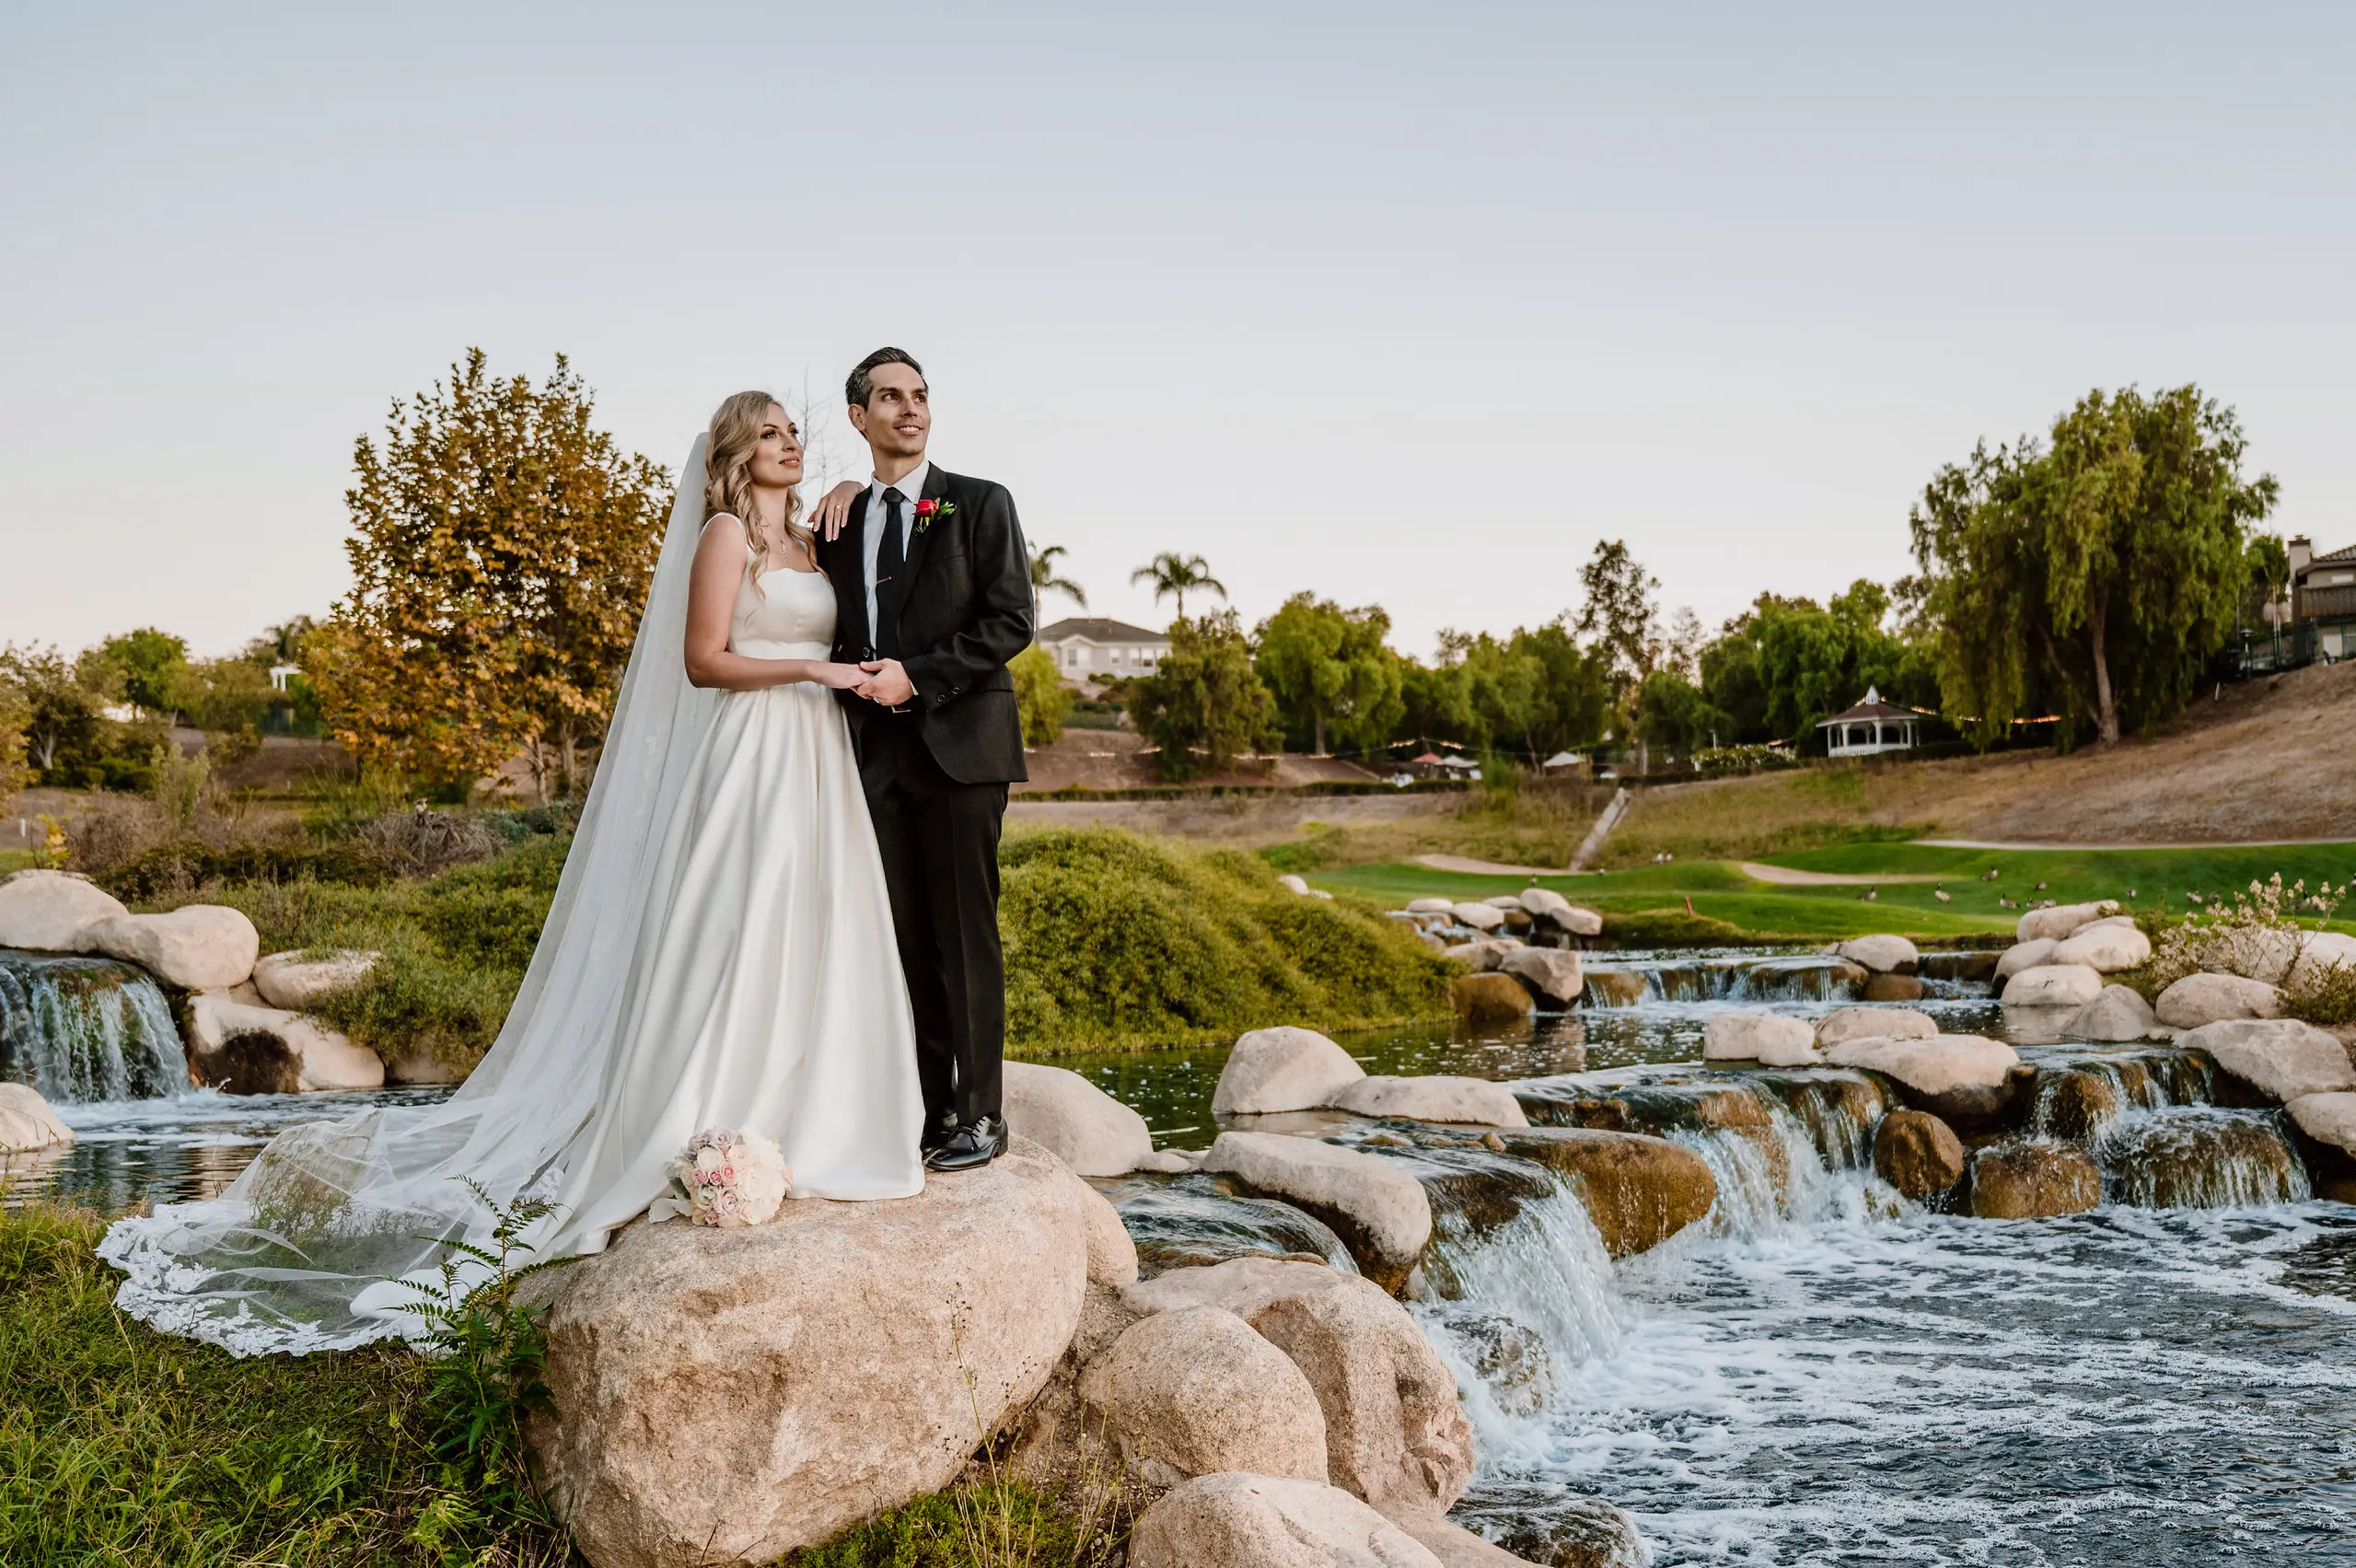 Alina & Max - wedding photography in California - 1